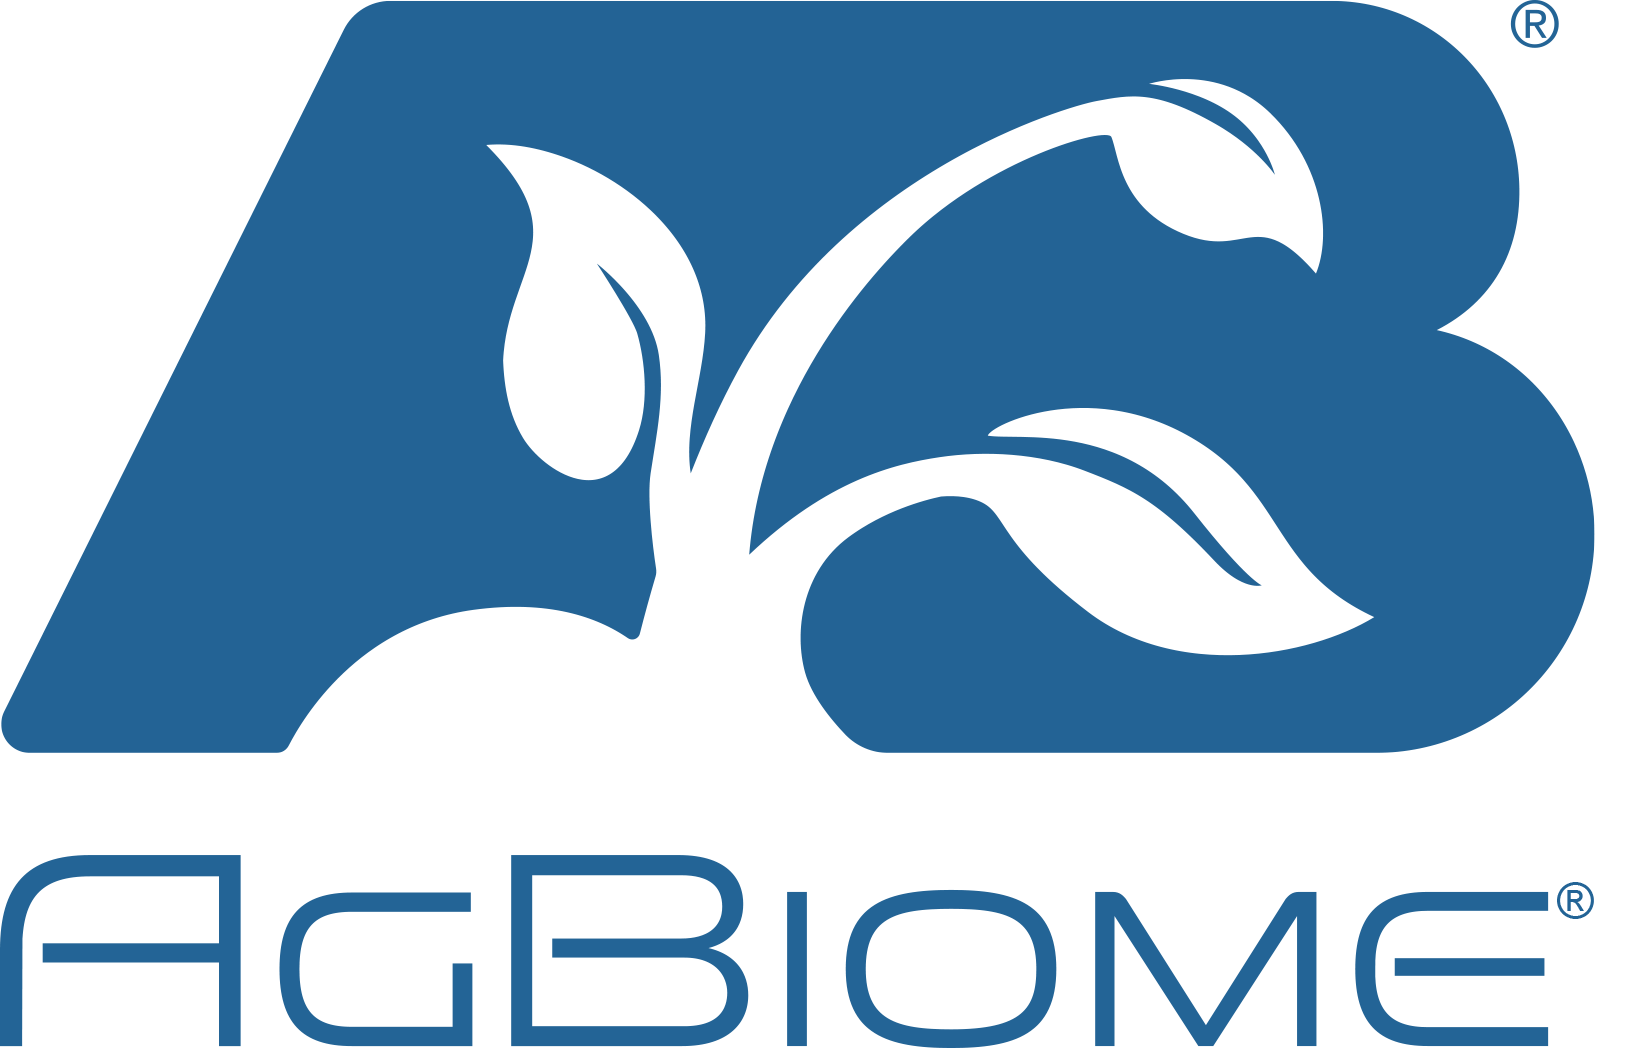 AgBiome logo